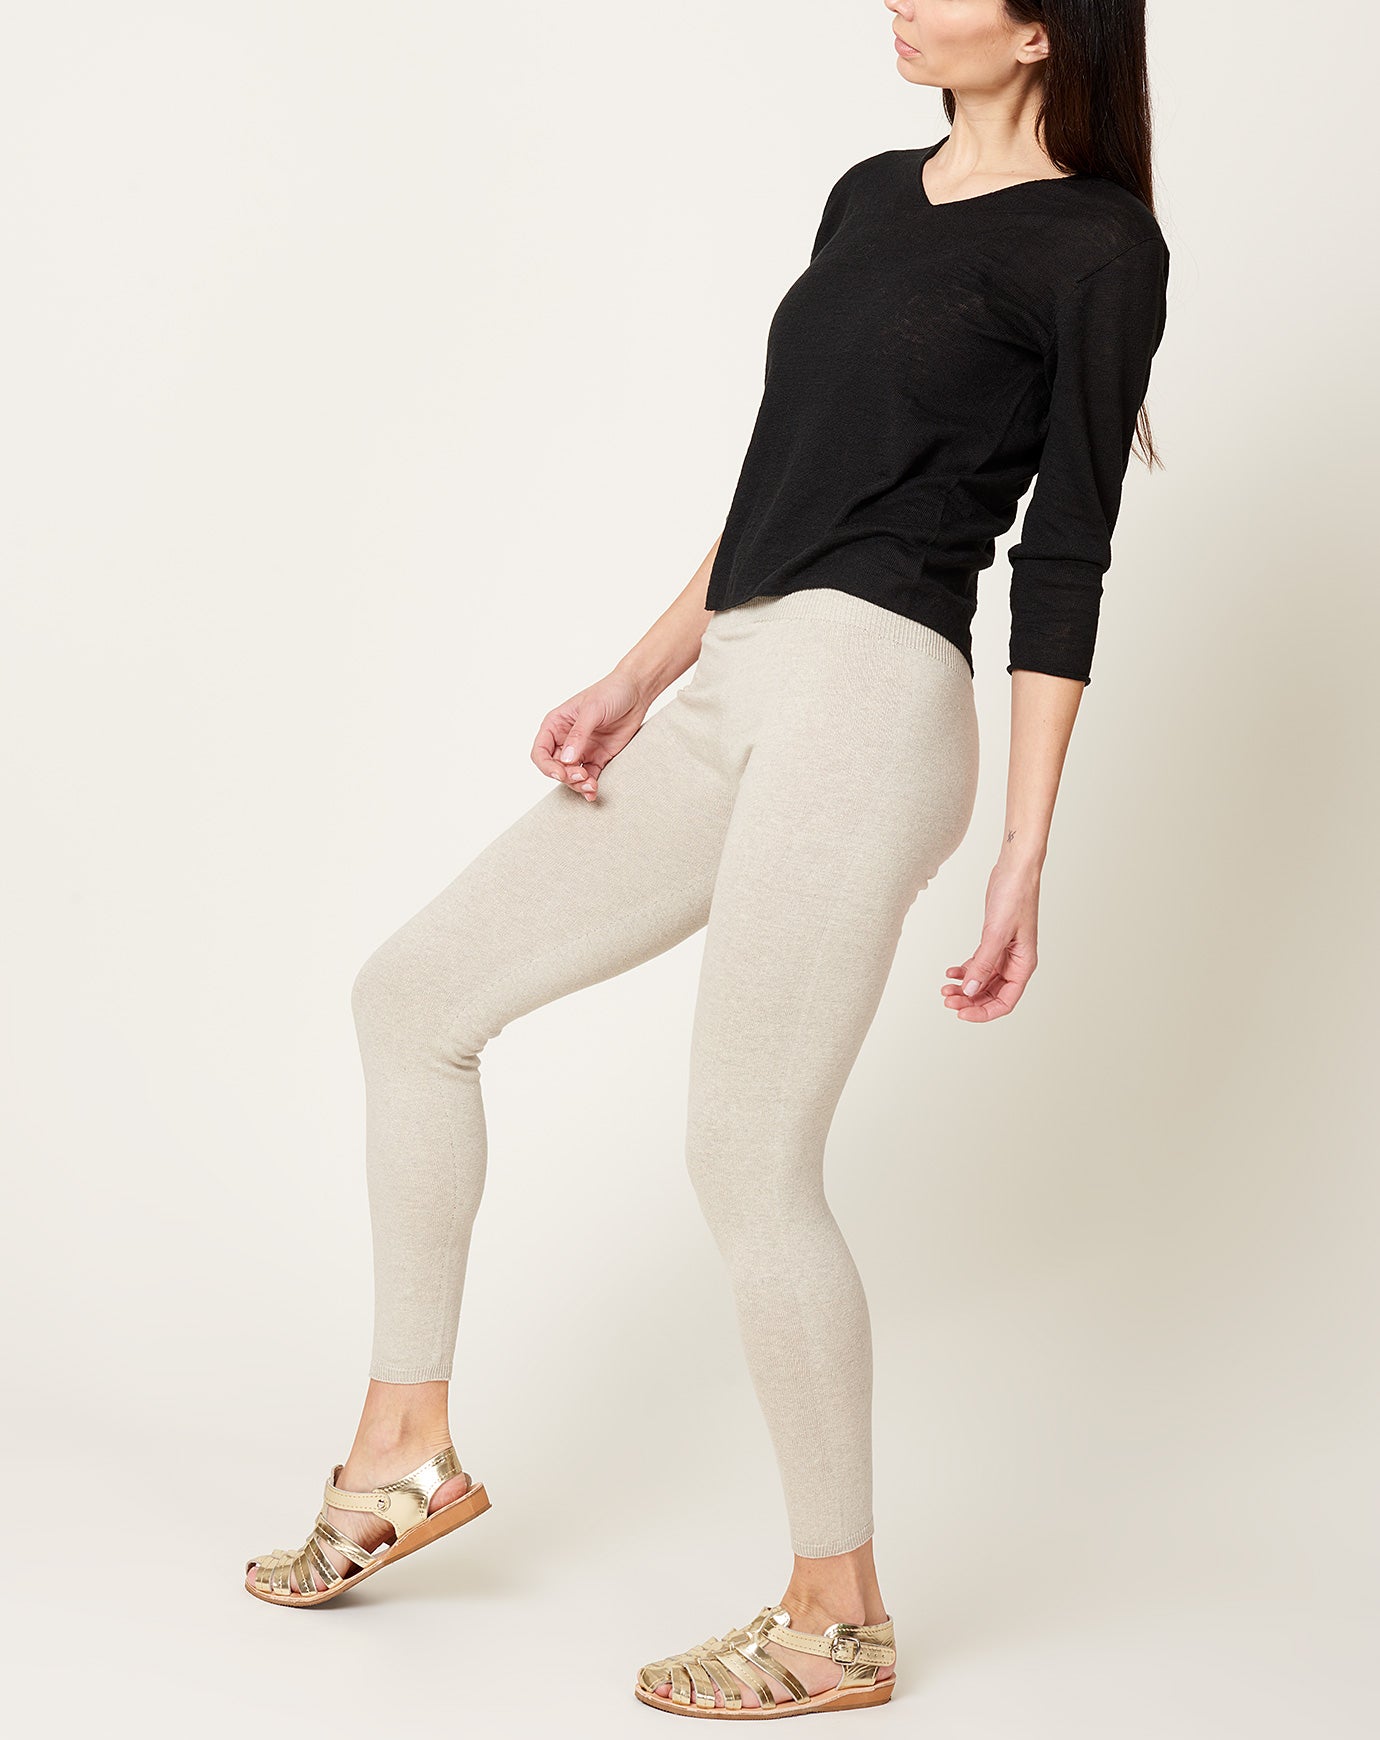 1X 2X 3X Premium Cotton Wide Waistband Long Leggings Yoga Full Length Pants  | eBay